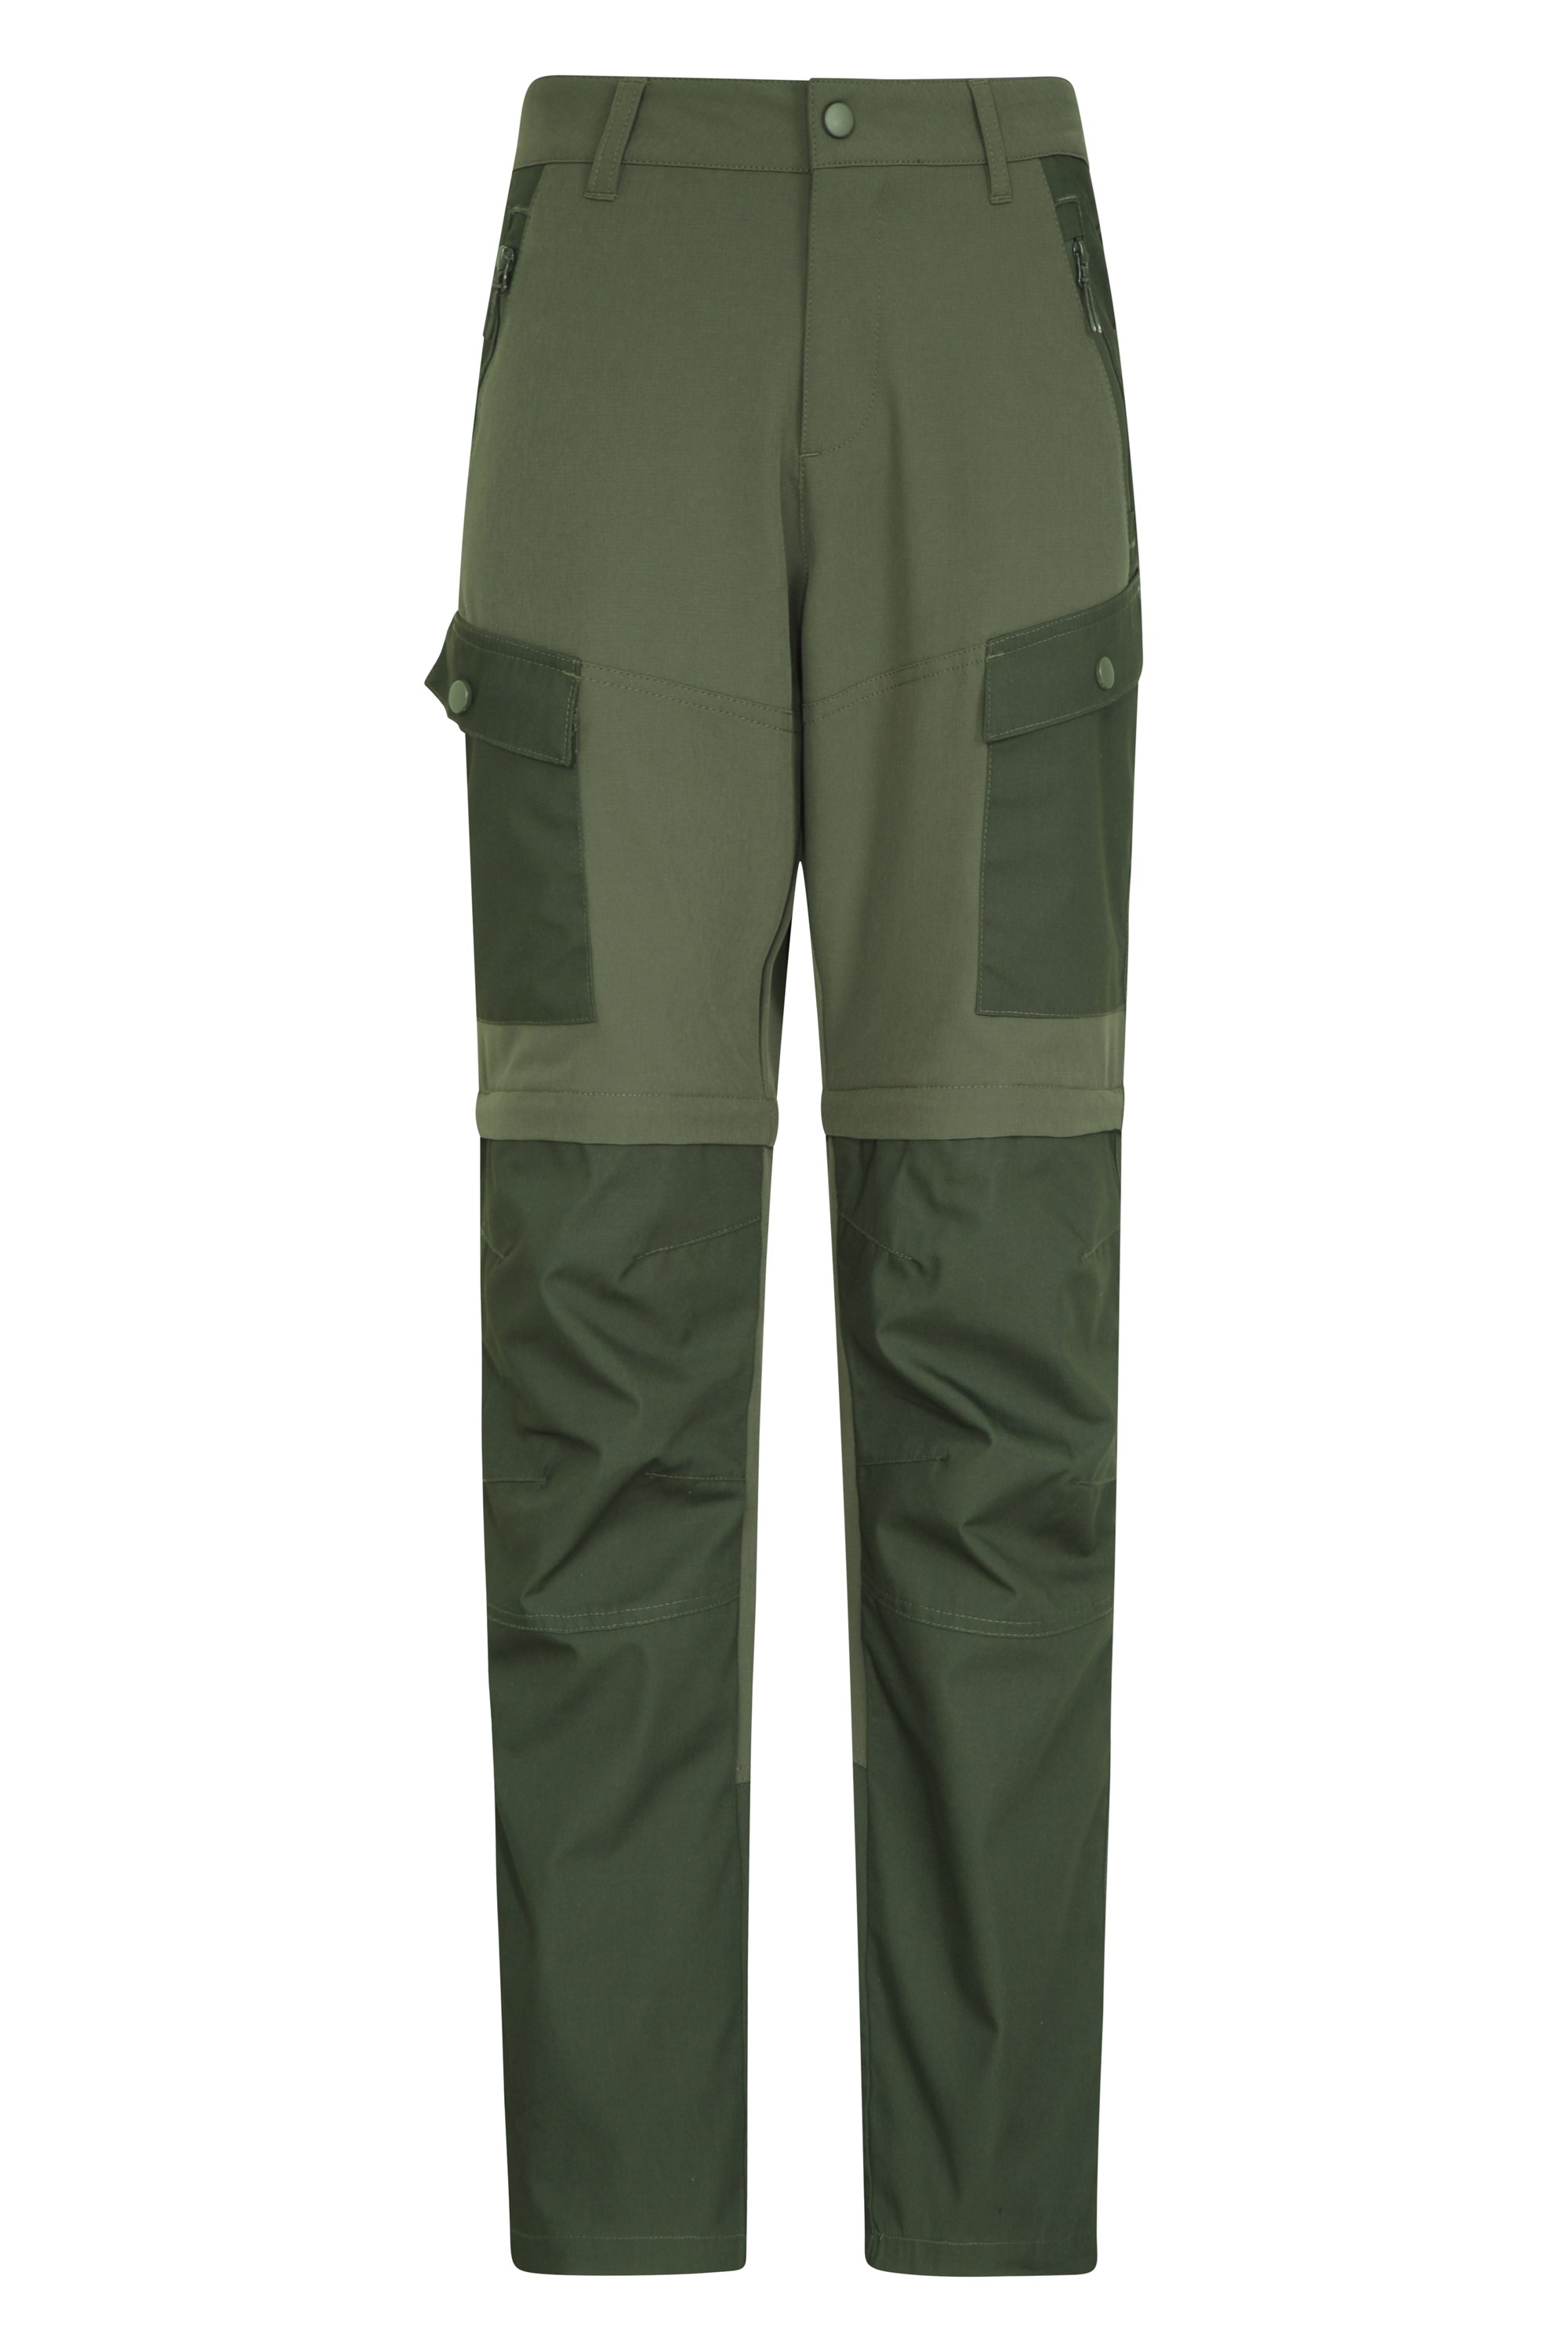 Lowe Alpine Ladies Walking trousers, Size 12R, Stone colour, Used | eBay